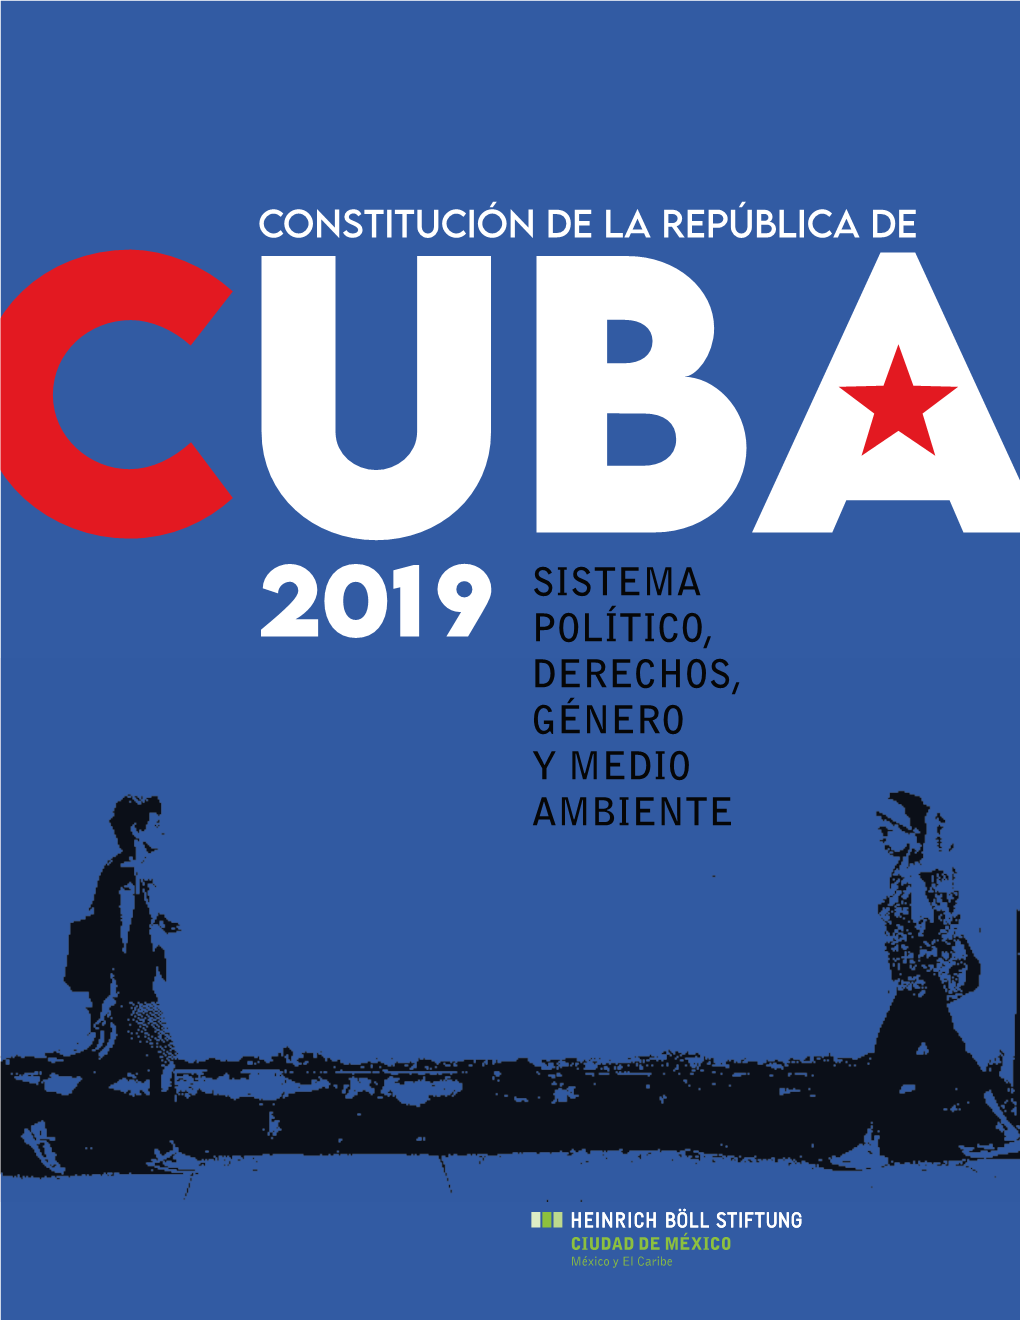 CUBA CONSTITUCION Vfinal.Pdf